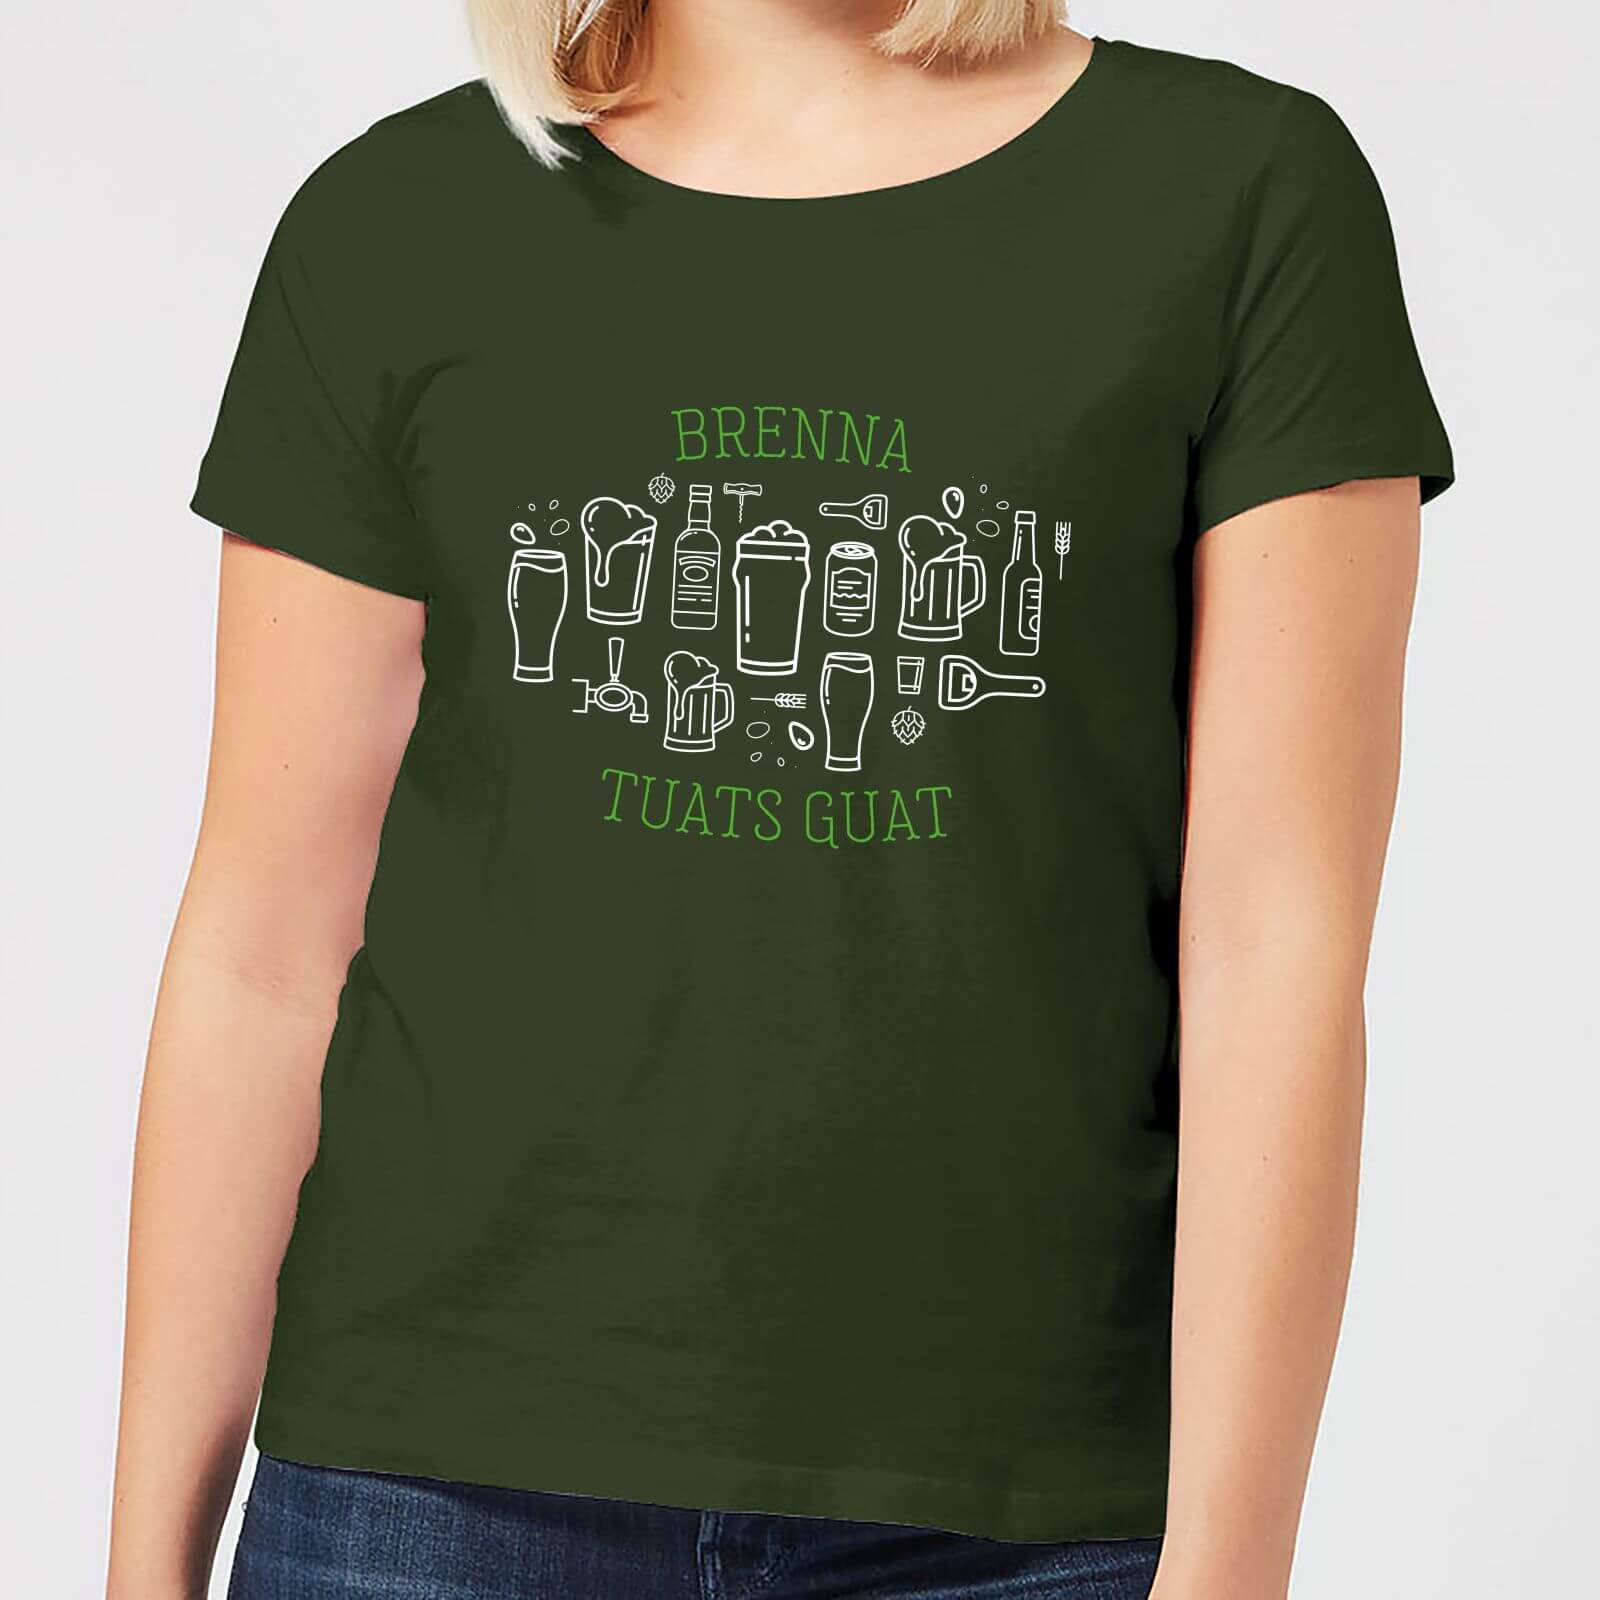 Brenna Tuats Guat! Women's T-Shirt - Forest Green - S - Forest Green